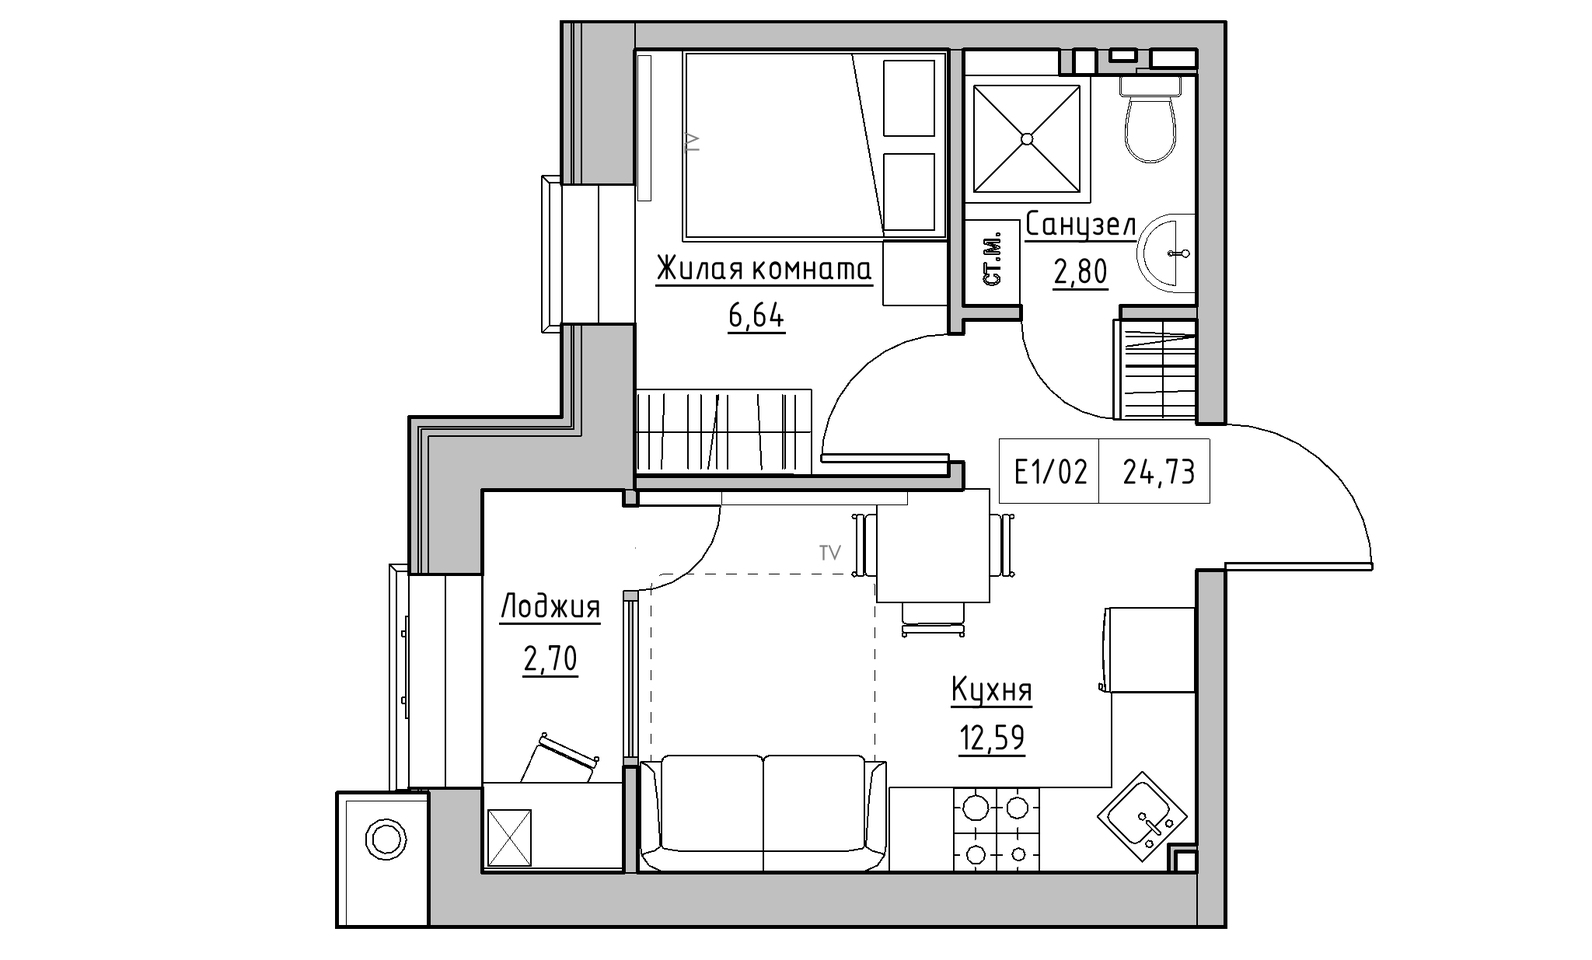 Planning 1-rm flats area 24.73m2, KS-014-05/0016.